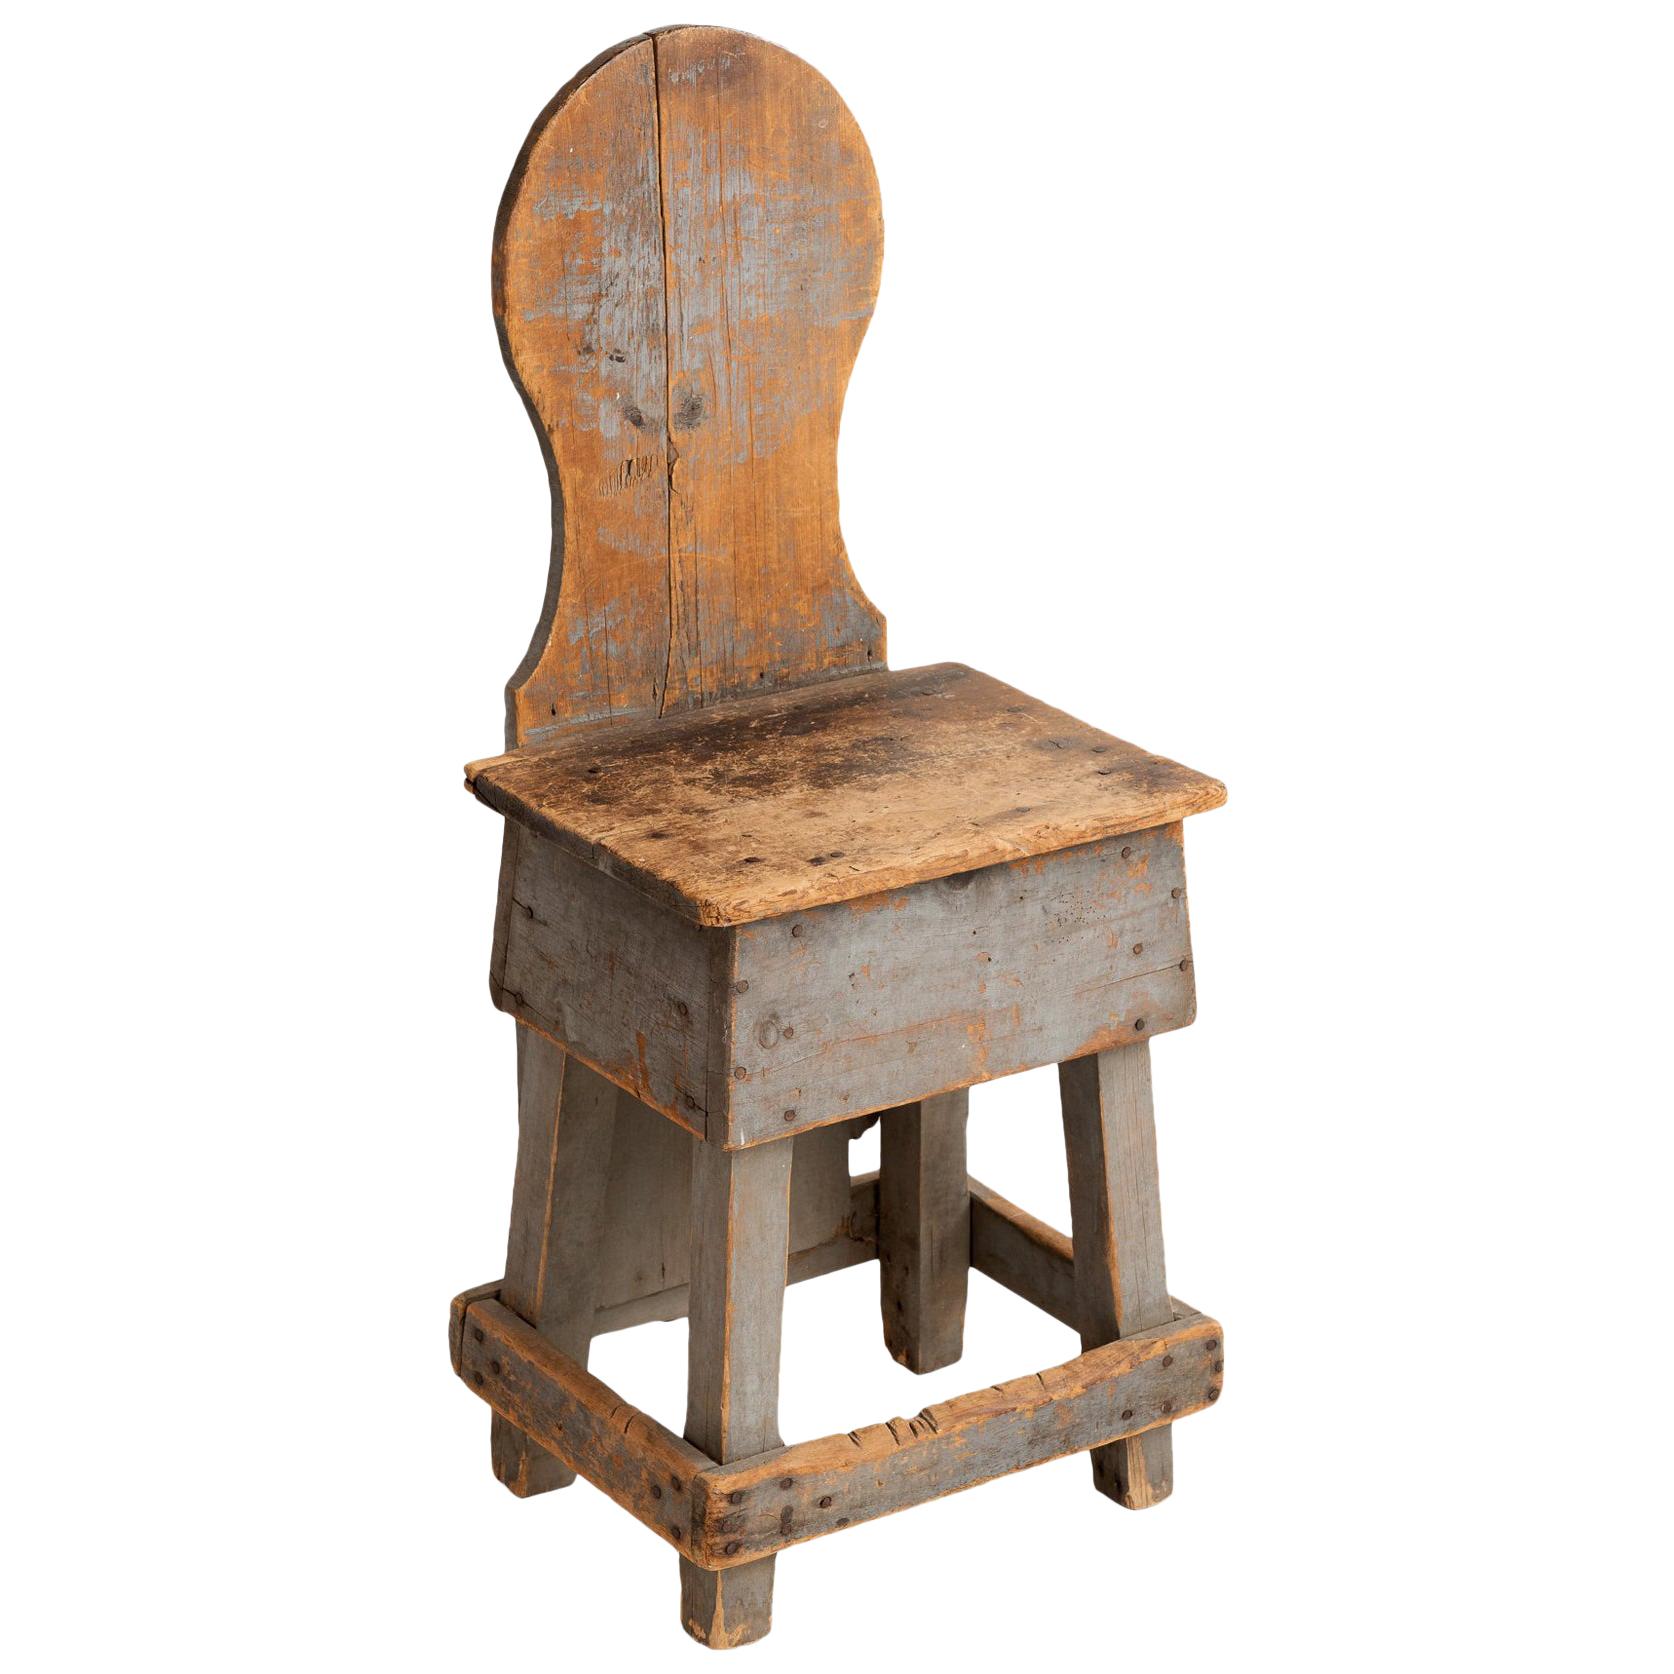 Primitive Factory Chair, America, circa 1900